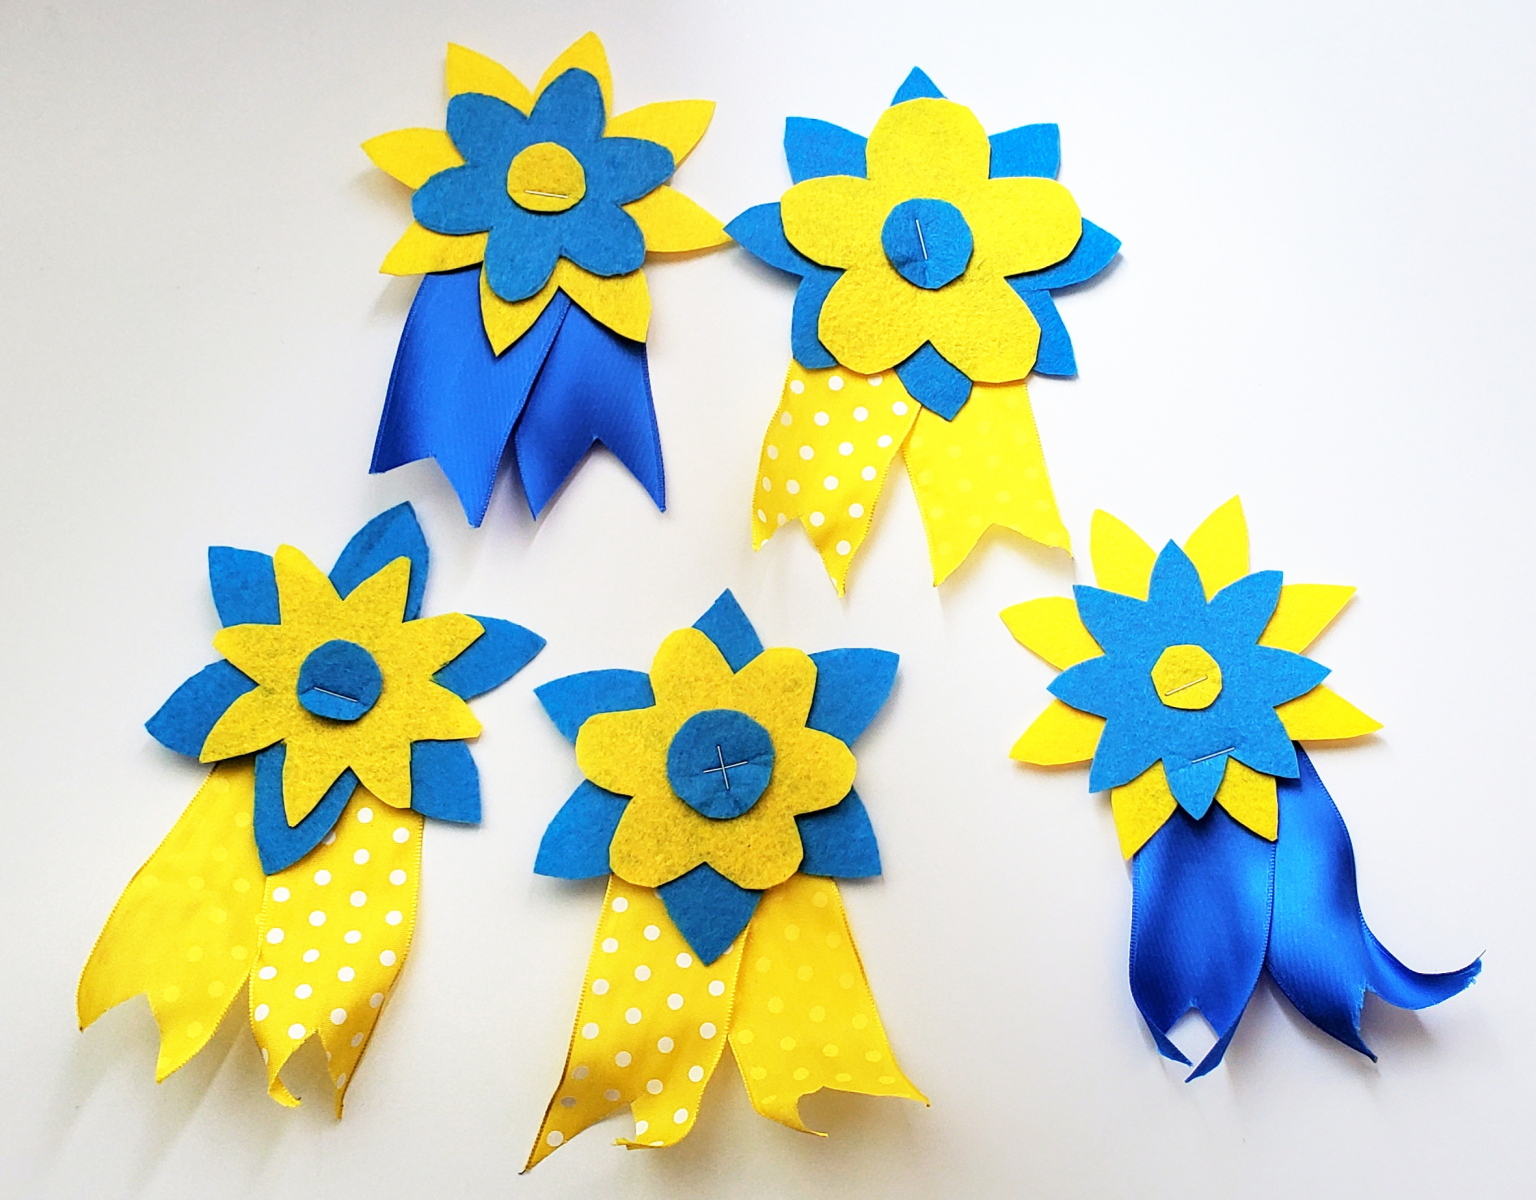 Flower badges - Ukrainian Wreath Art Project 